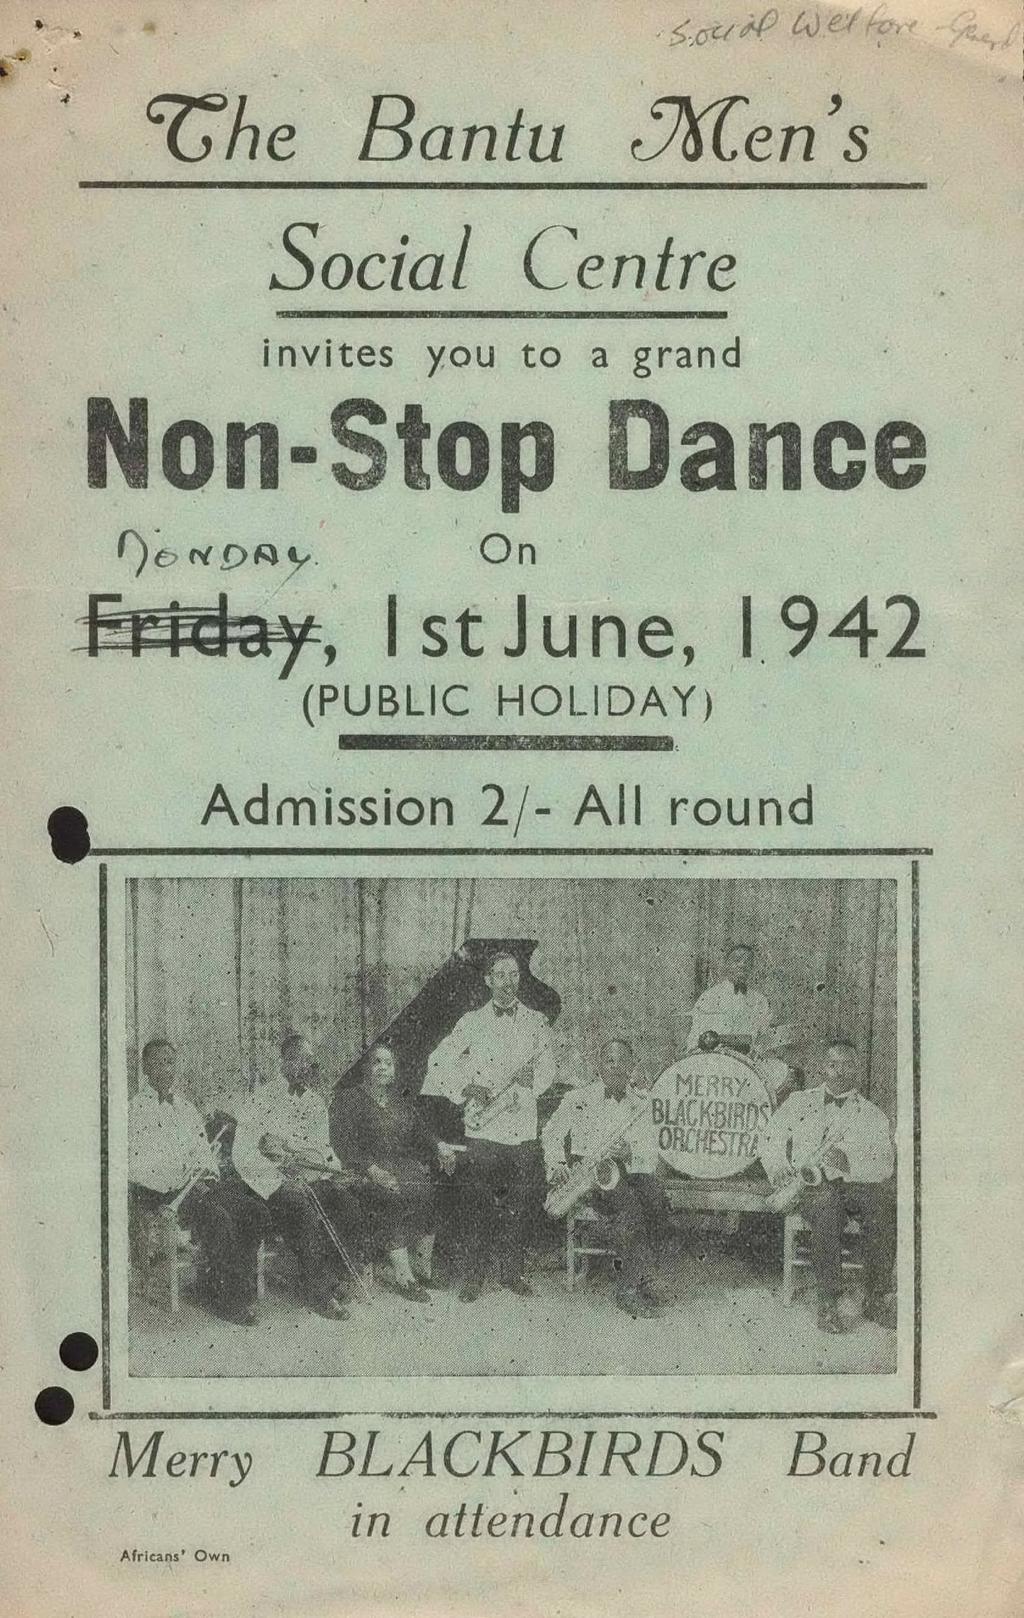 ^Uhe Bantu <%Zen s Social Centre invites you to a grand Non-Stop Dance On fey-, I stjune, 1942 ( P